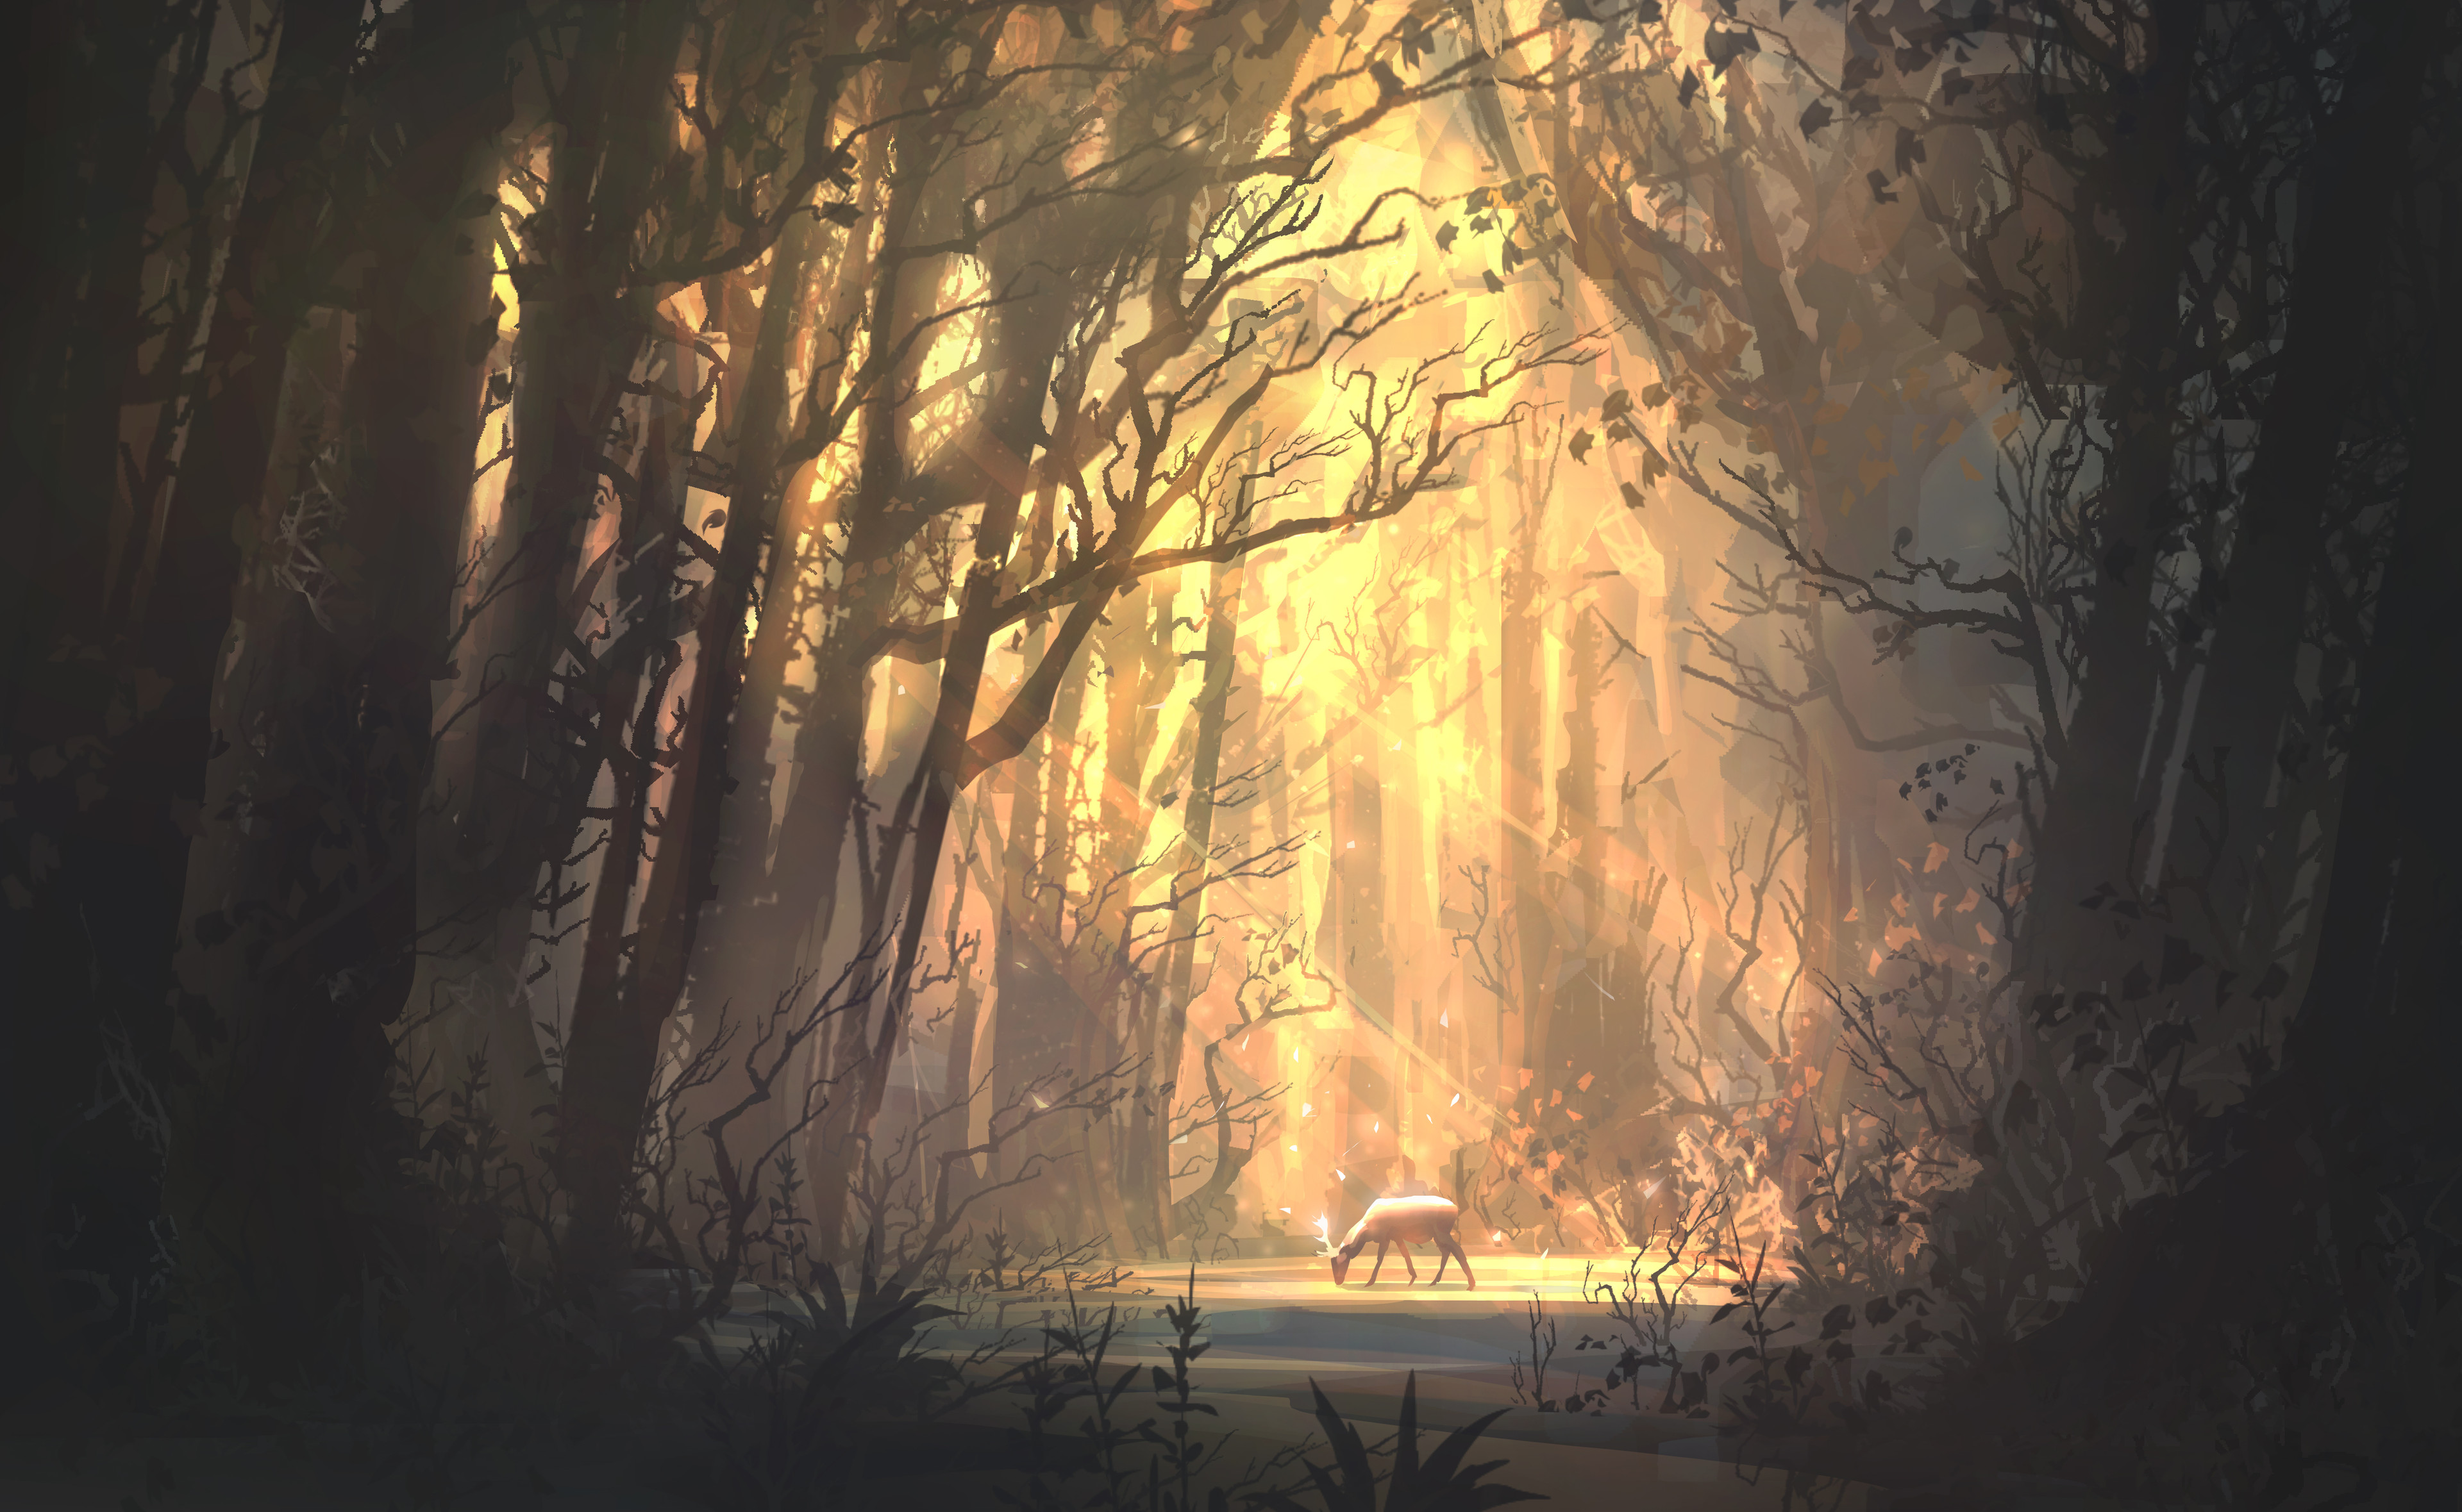 General 3840x2359 David Frasheski sun rays sunlight digital art deer trees forest landscape drawing artwork ArtStation